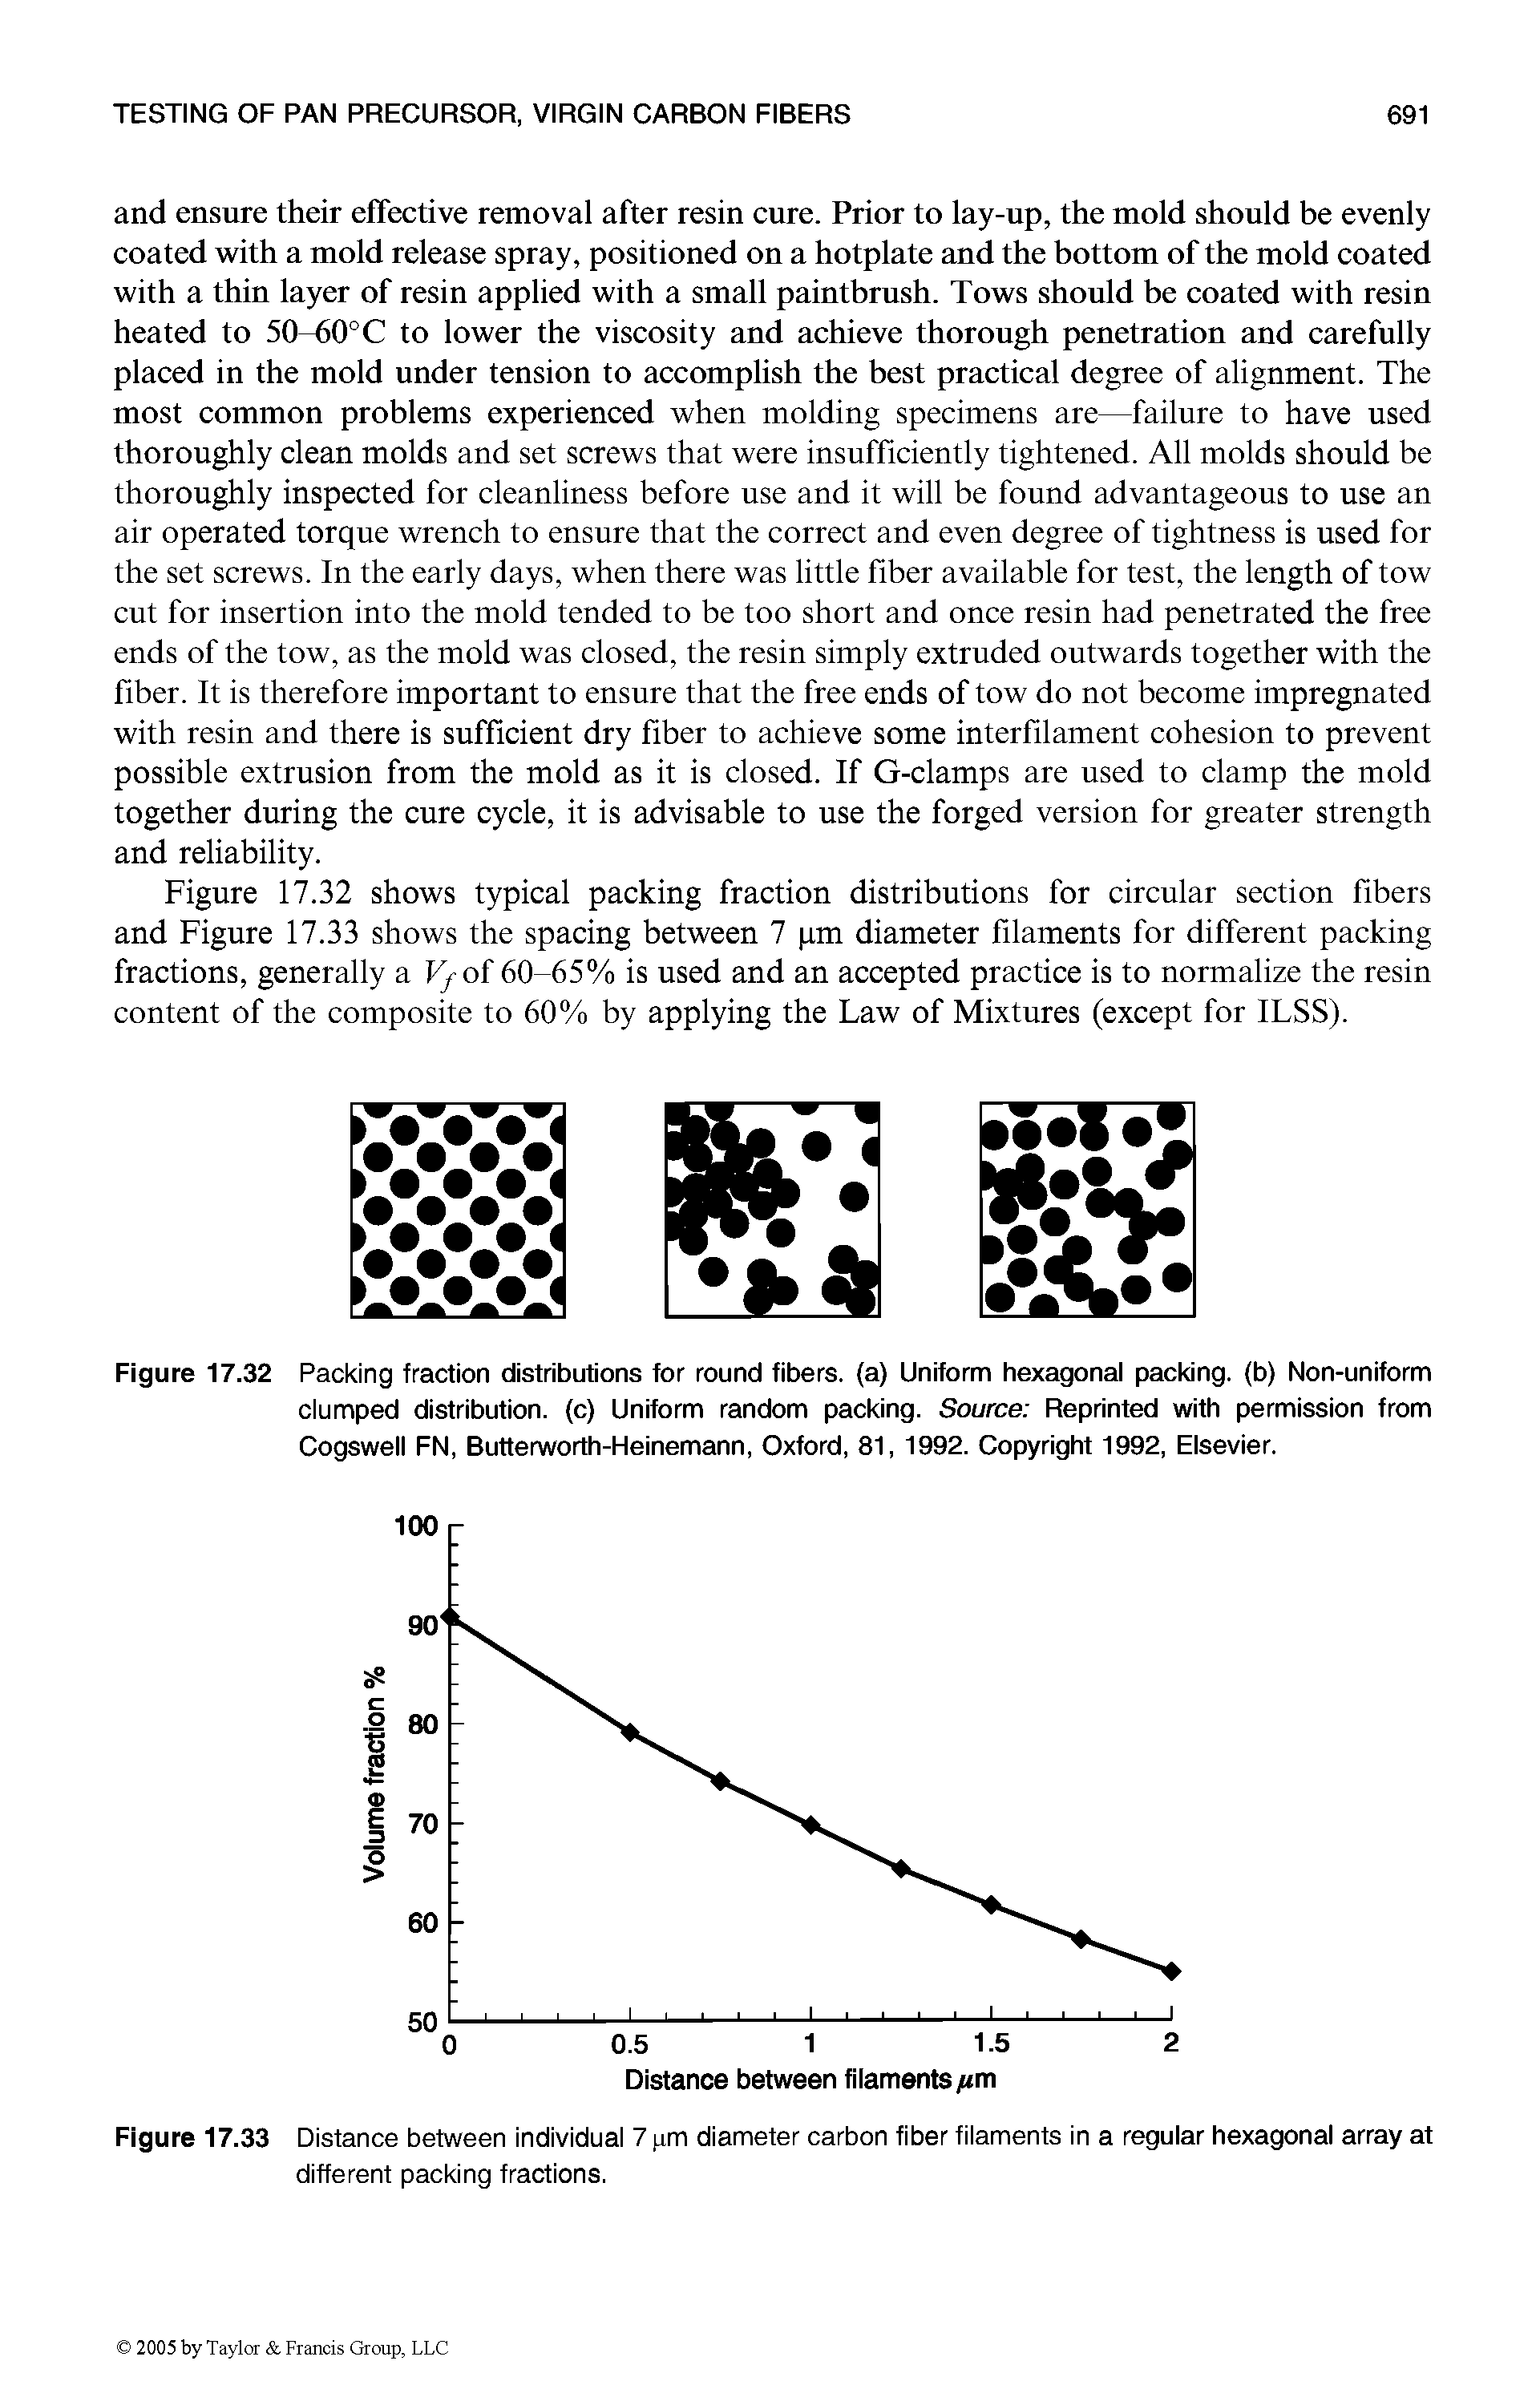 Figure 17.33 Distance between individual 7 xm diameter carbon fiber filaments in a regular hexagonal array at different packing fractions.